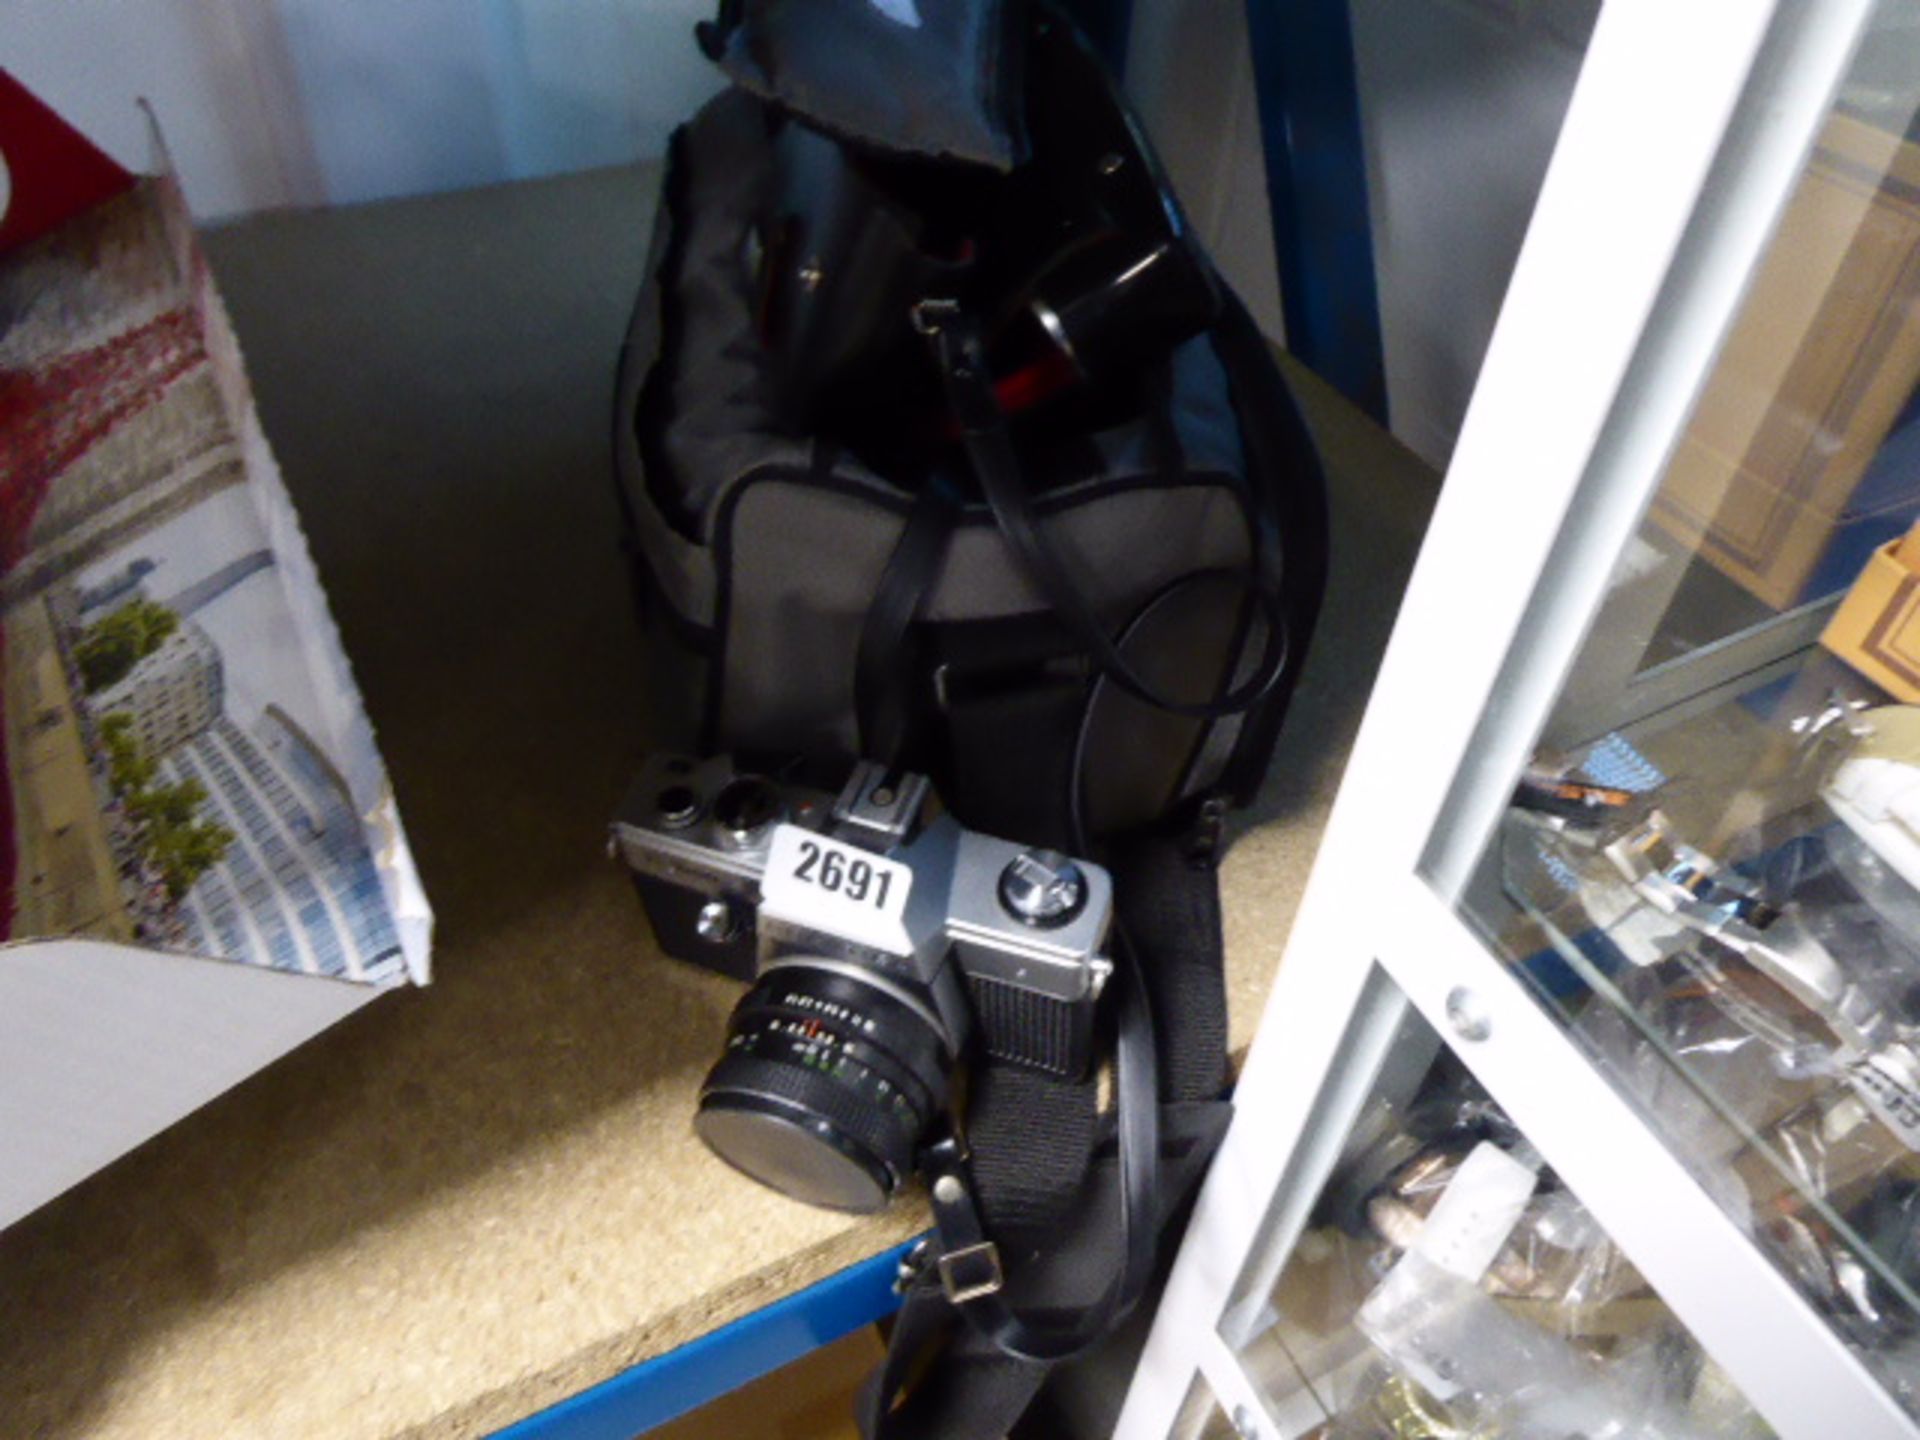 Practika Super TL21000 film camera with accessories in bag